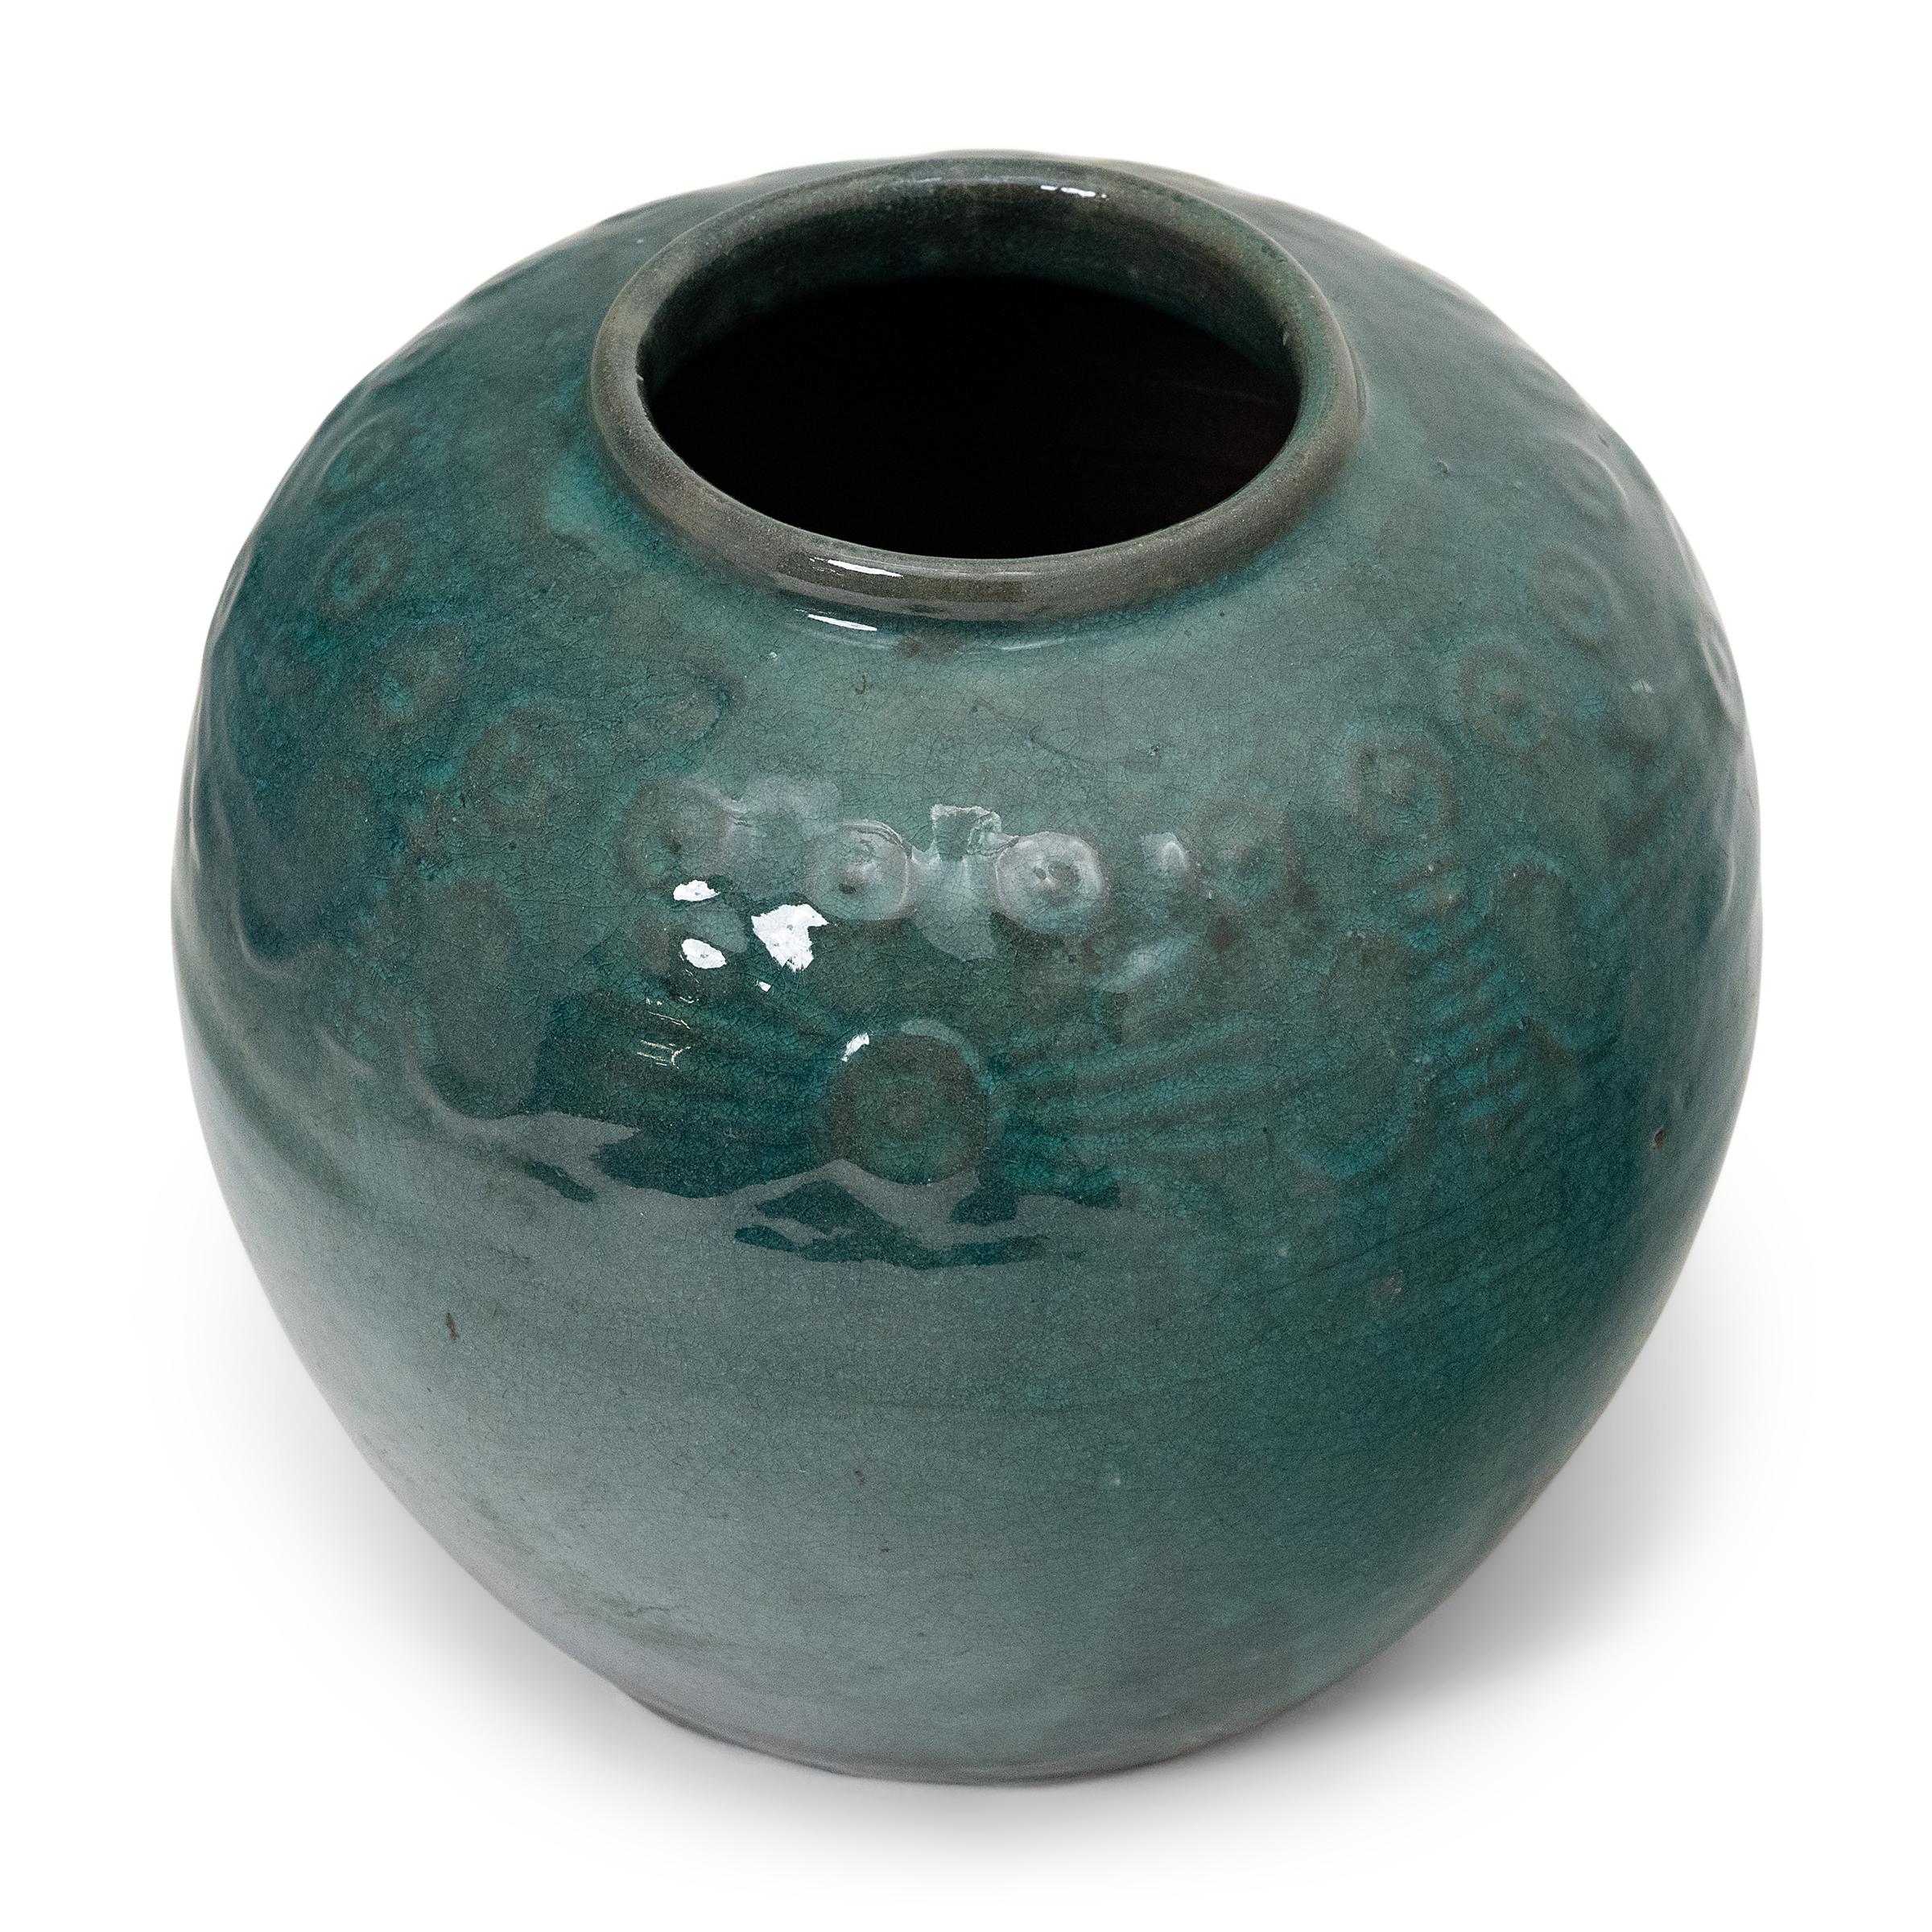 Qing Jade Chinese Salt Jar, c. 1900